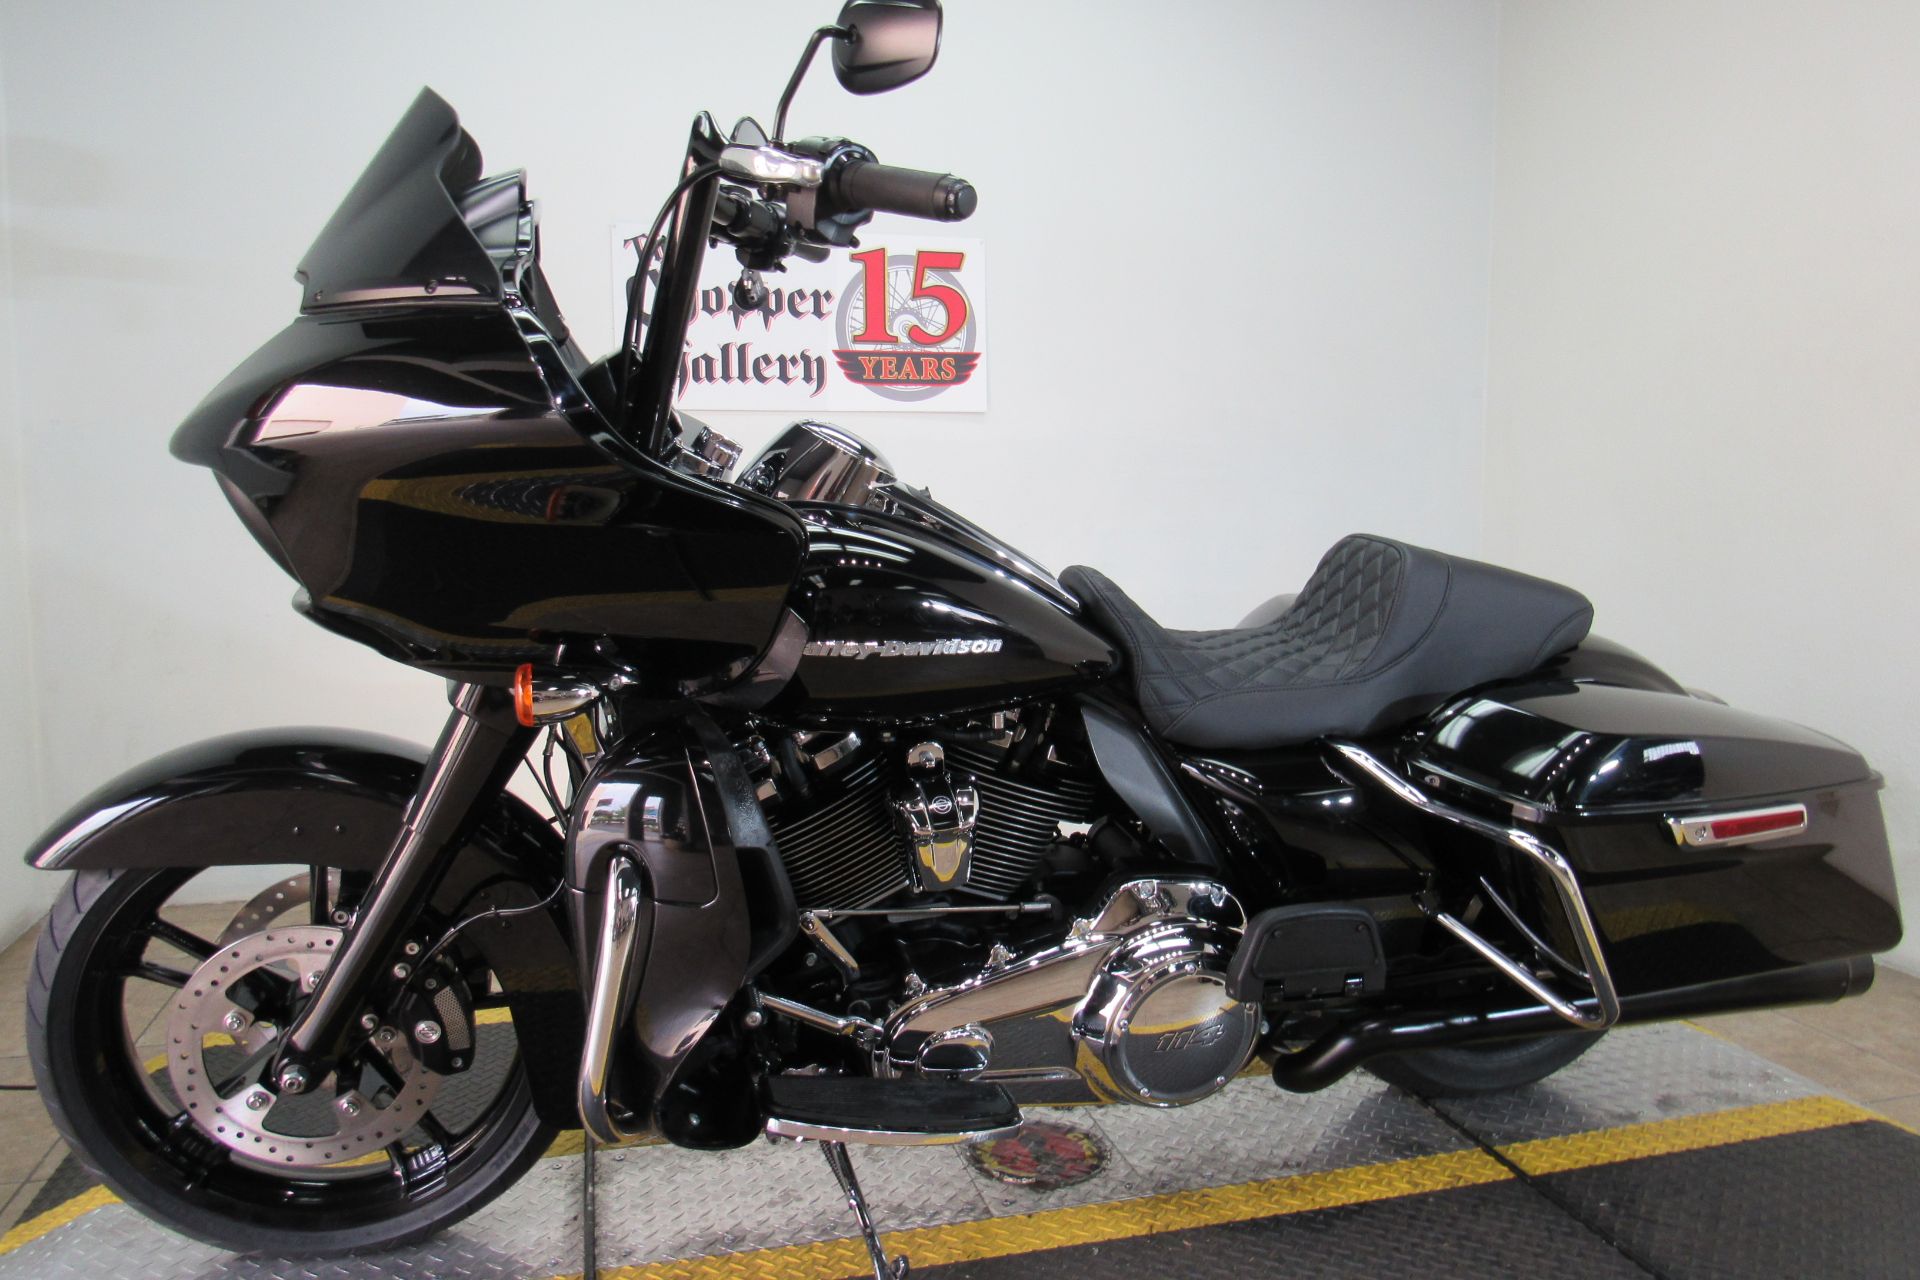 2021 Harley-Davidson Road Glide® Limited in Temecula, California - Photo 7